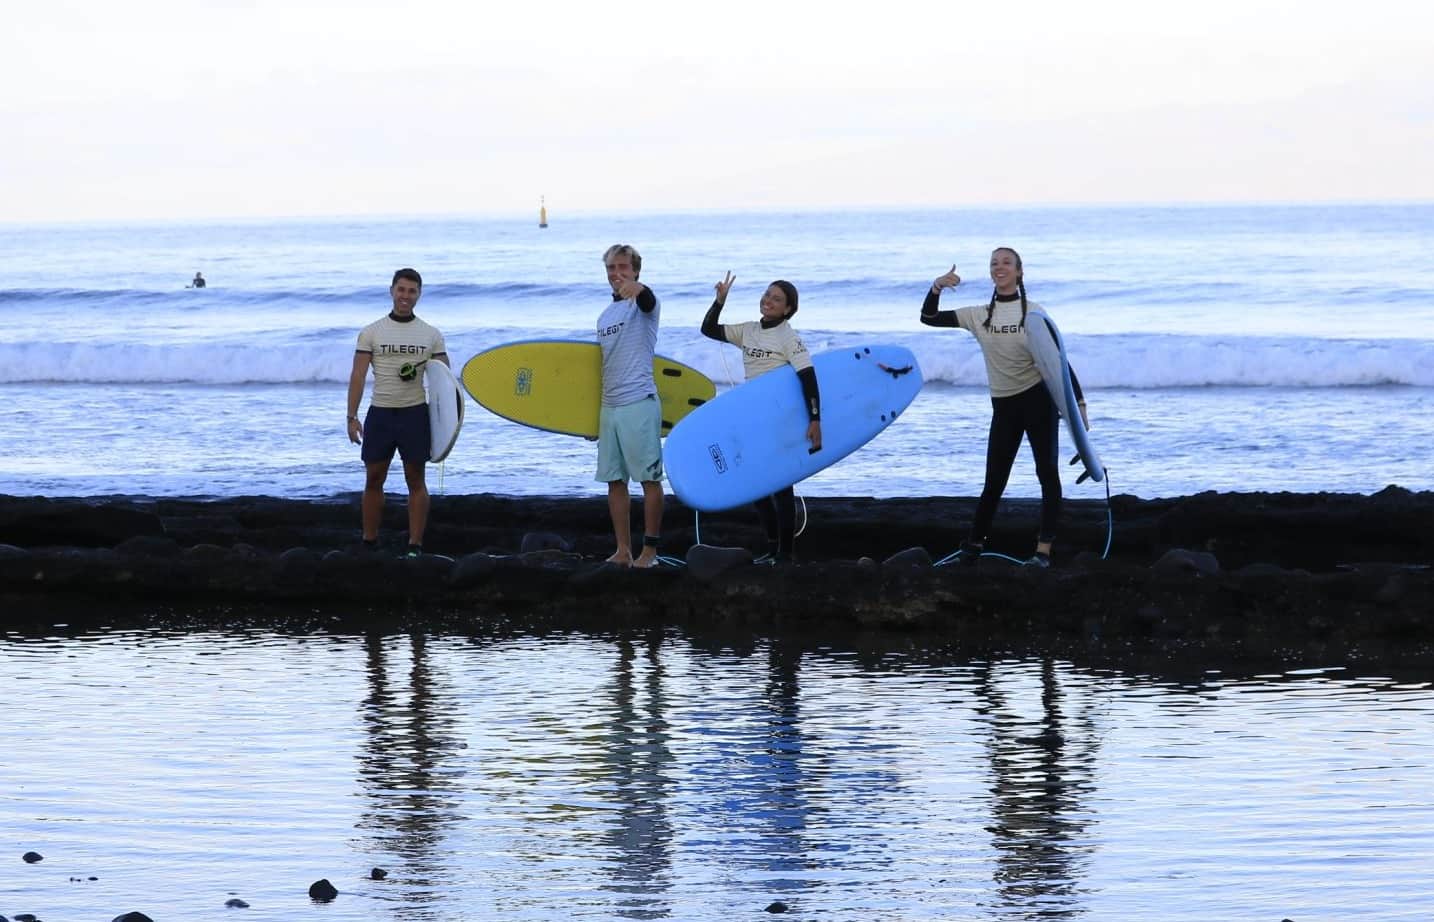 Surf lessons in Las Americas, Tenerife at “Tilegit” Surf School” 🏄🤙